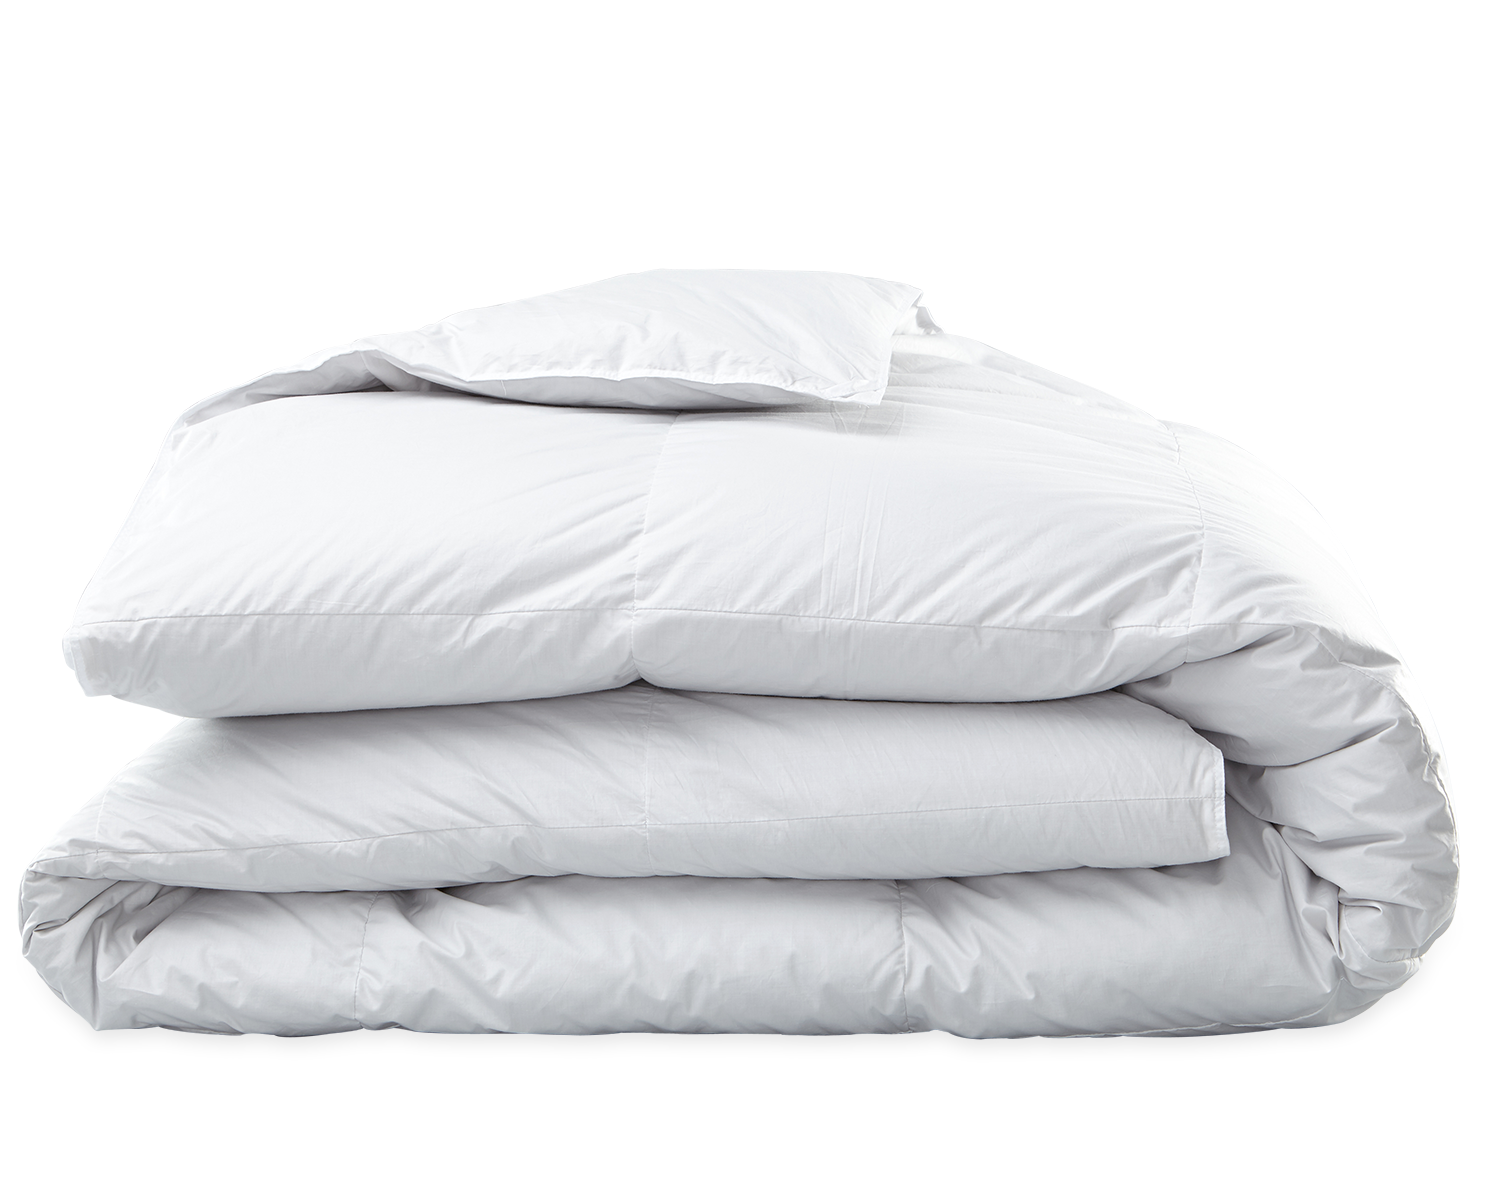 Edelweiss Comforter Cotton Matouk Luxury Linens